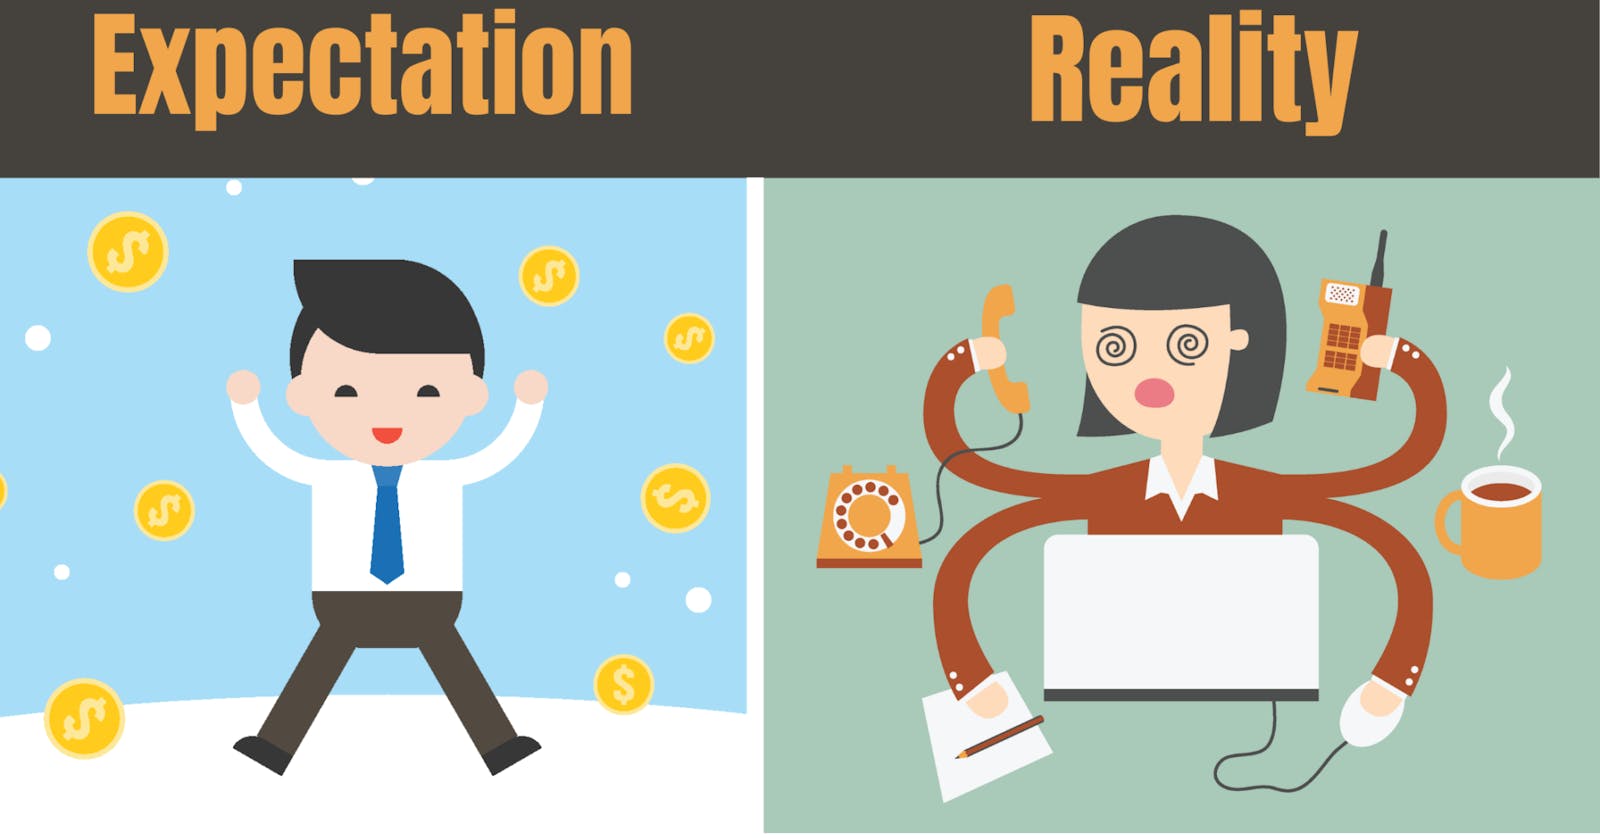 Developer: Expectation vs Reality.